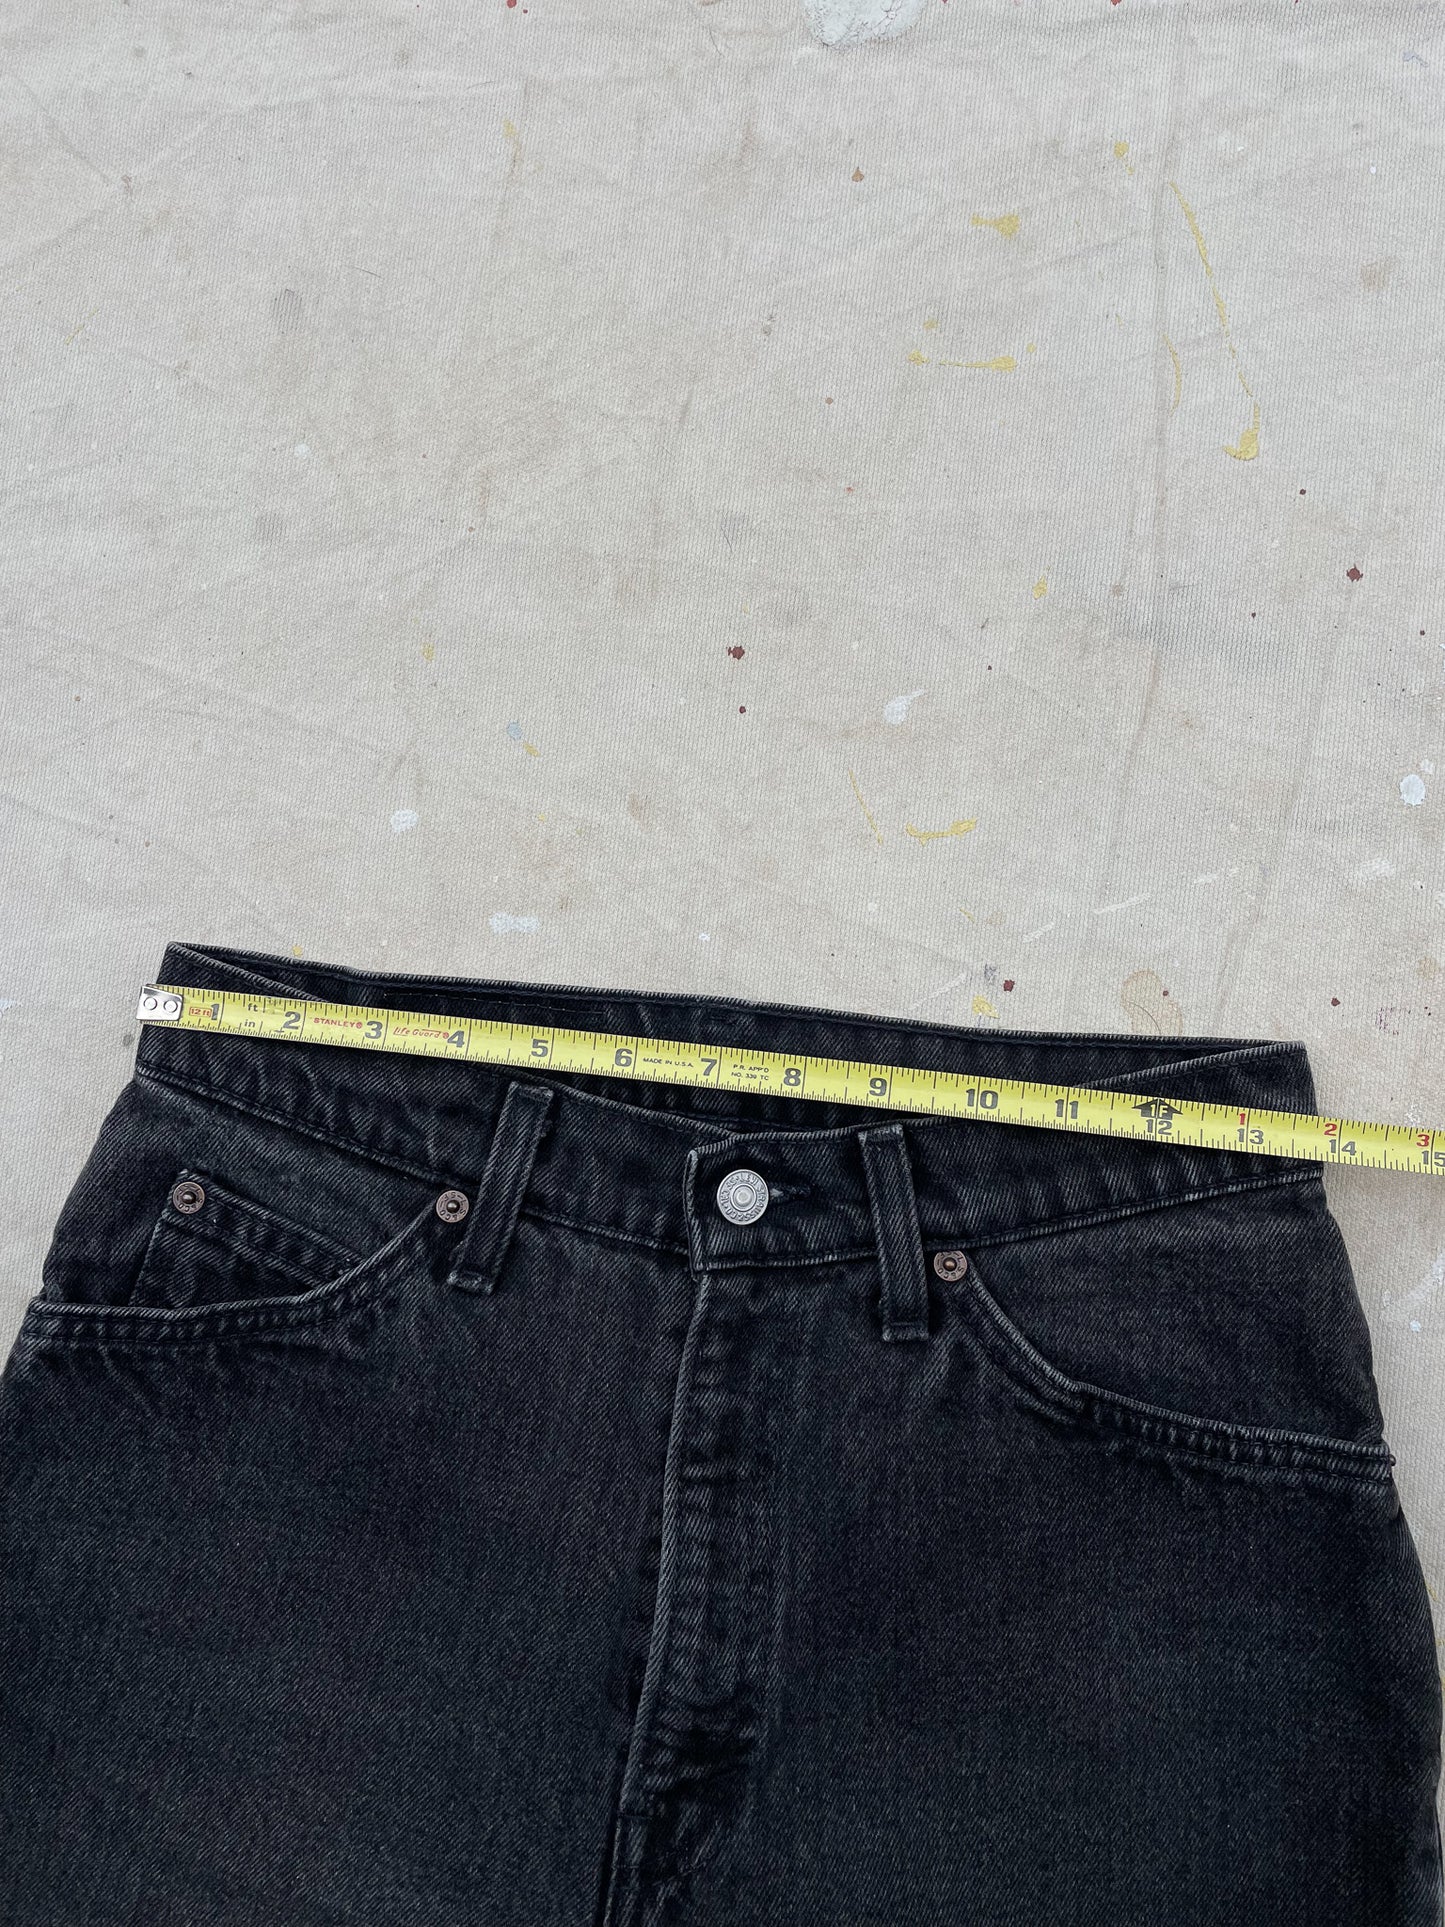 90's Levi's 912 Orange Tab Jeans—[28x30]